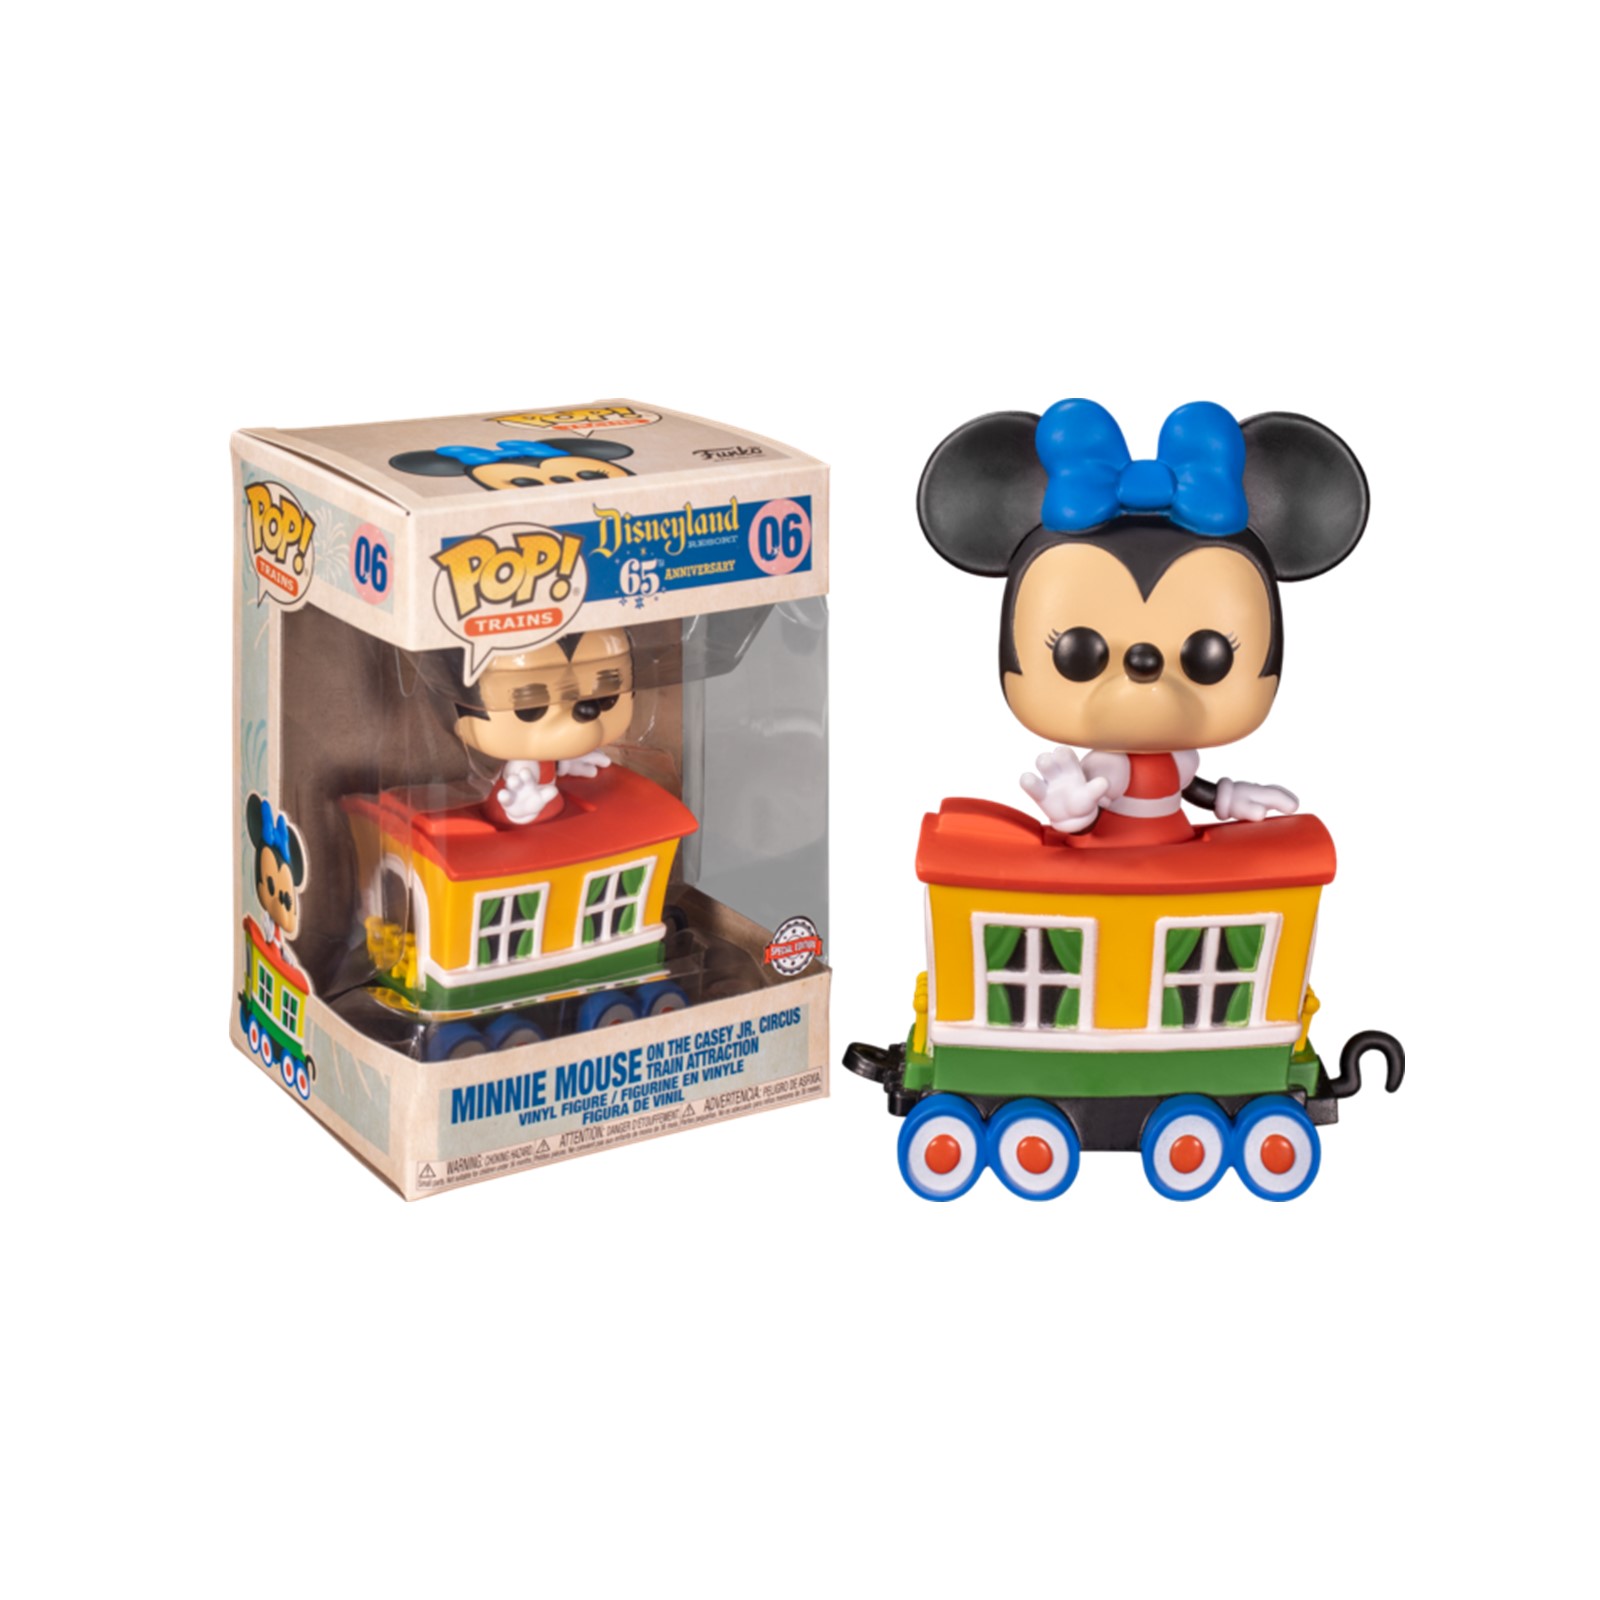 Funko Pop Disney Minnie Mouse in casey Jr – 06